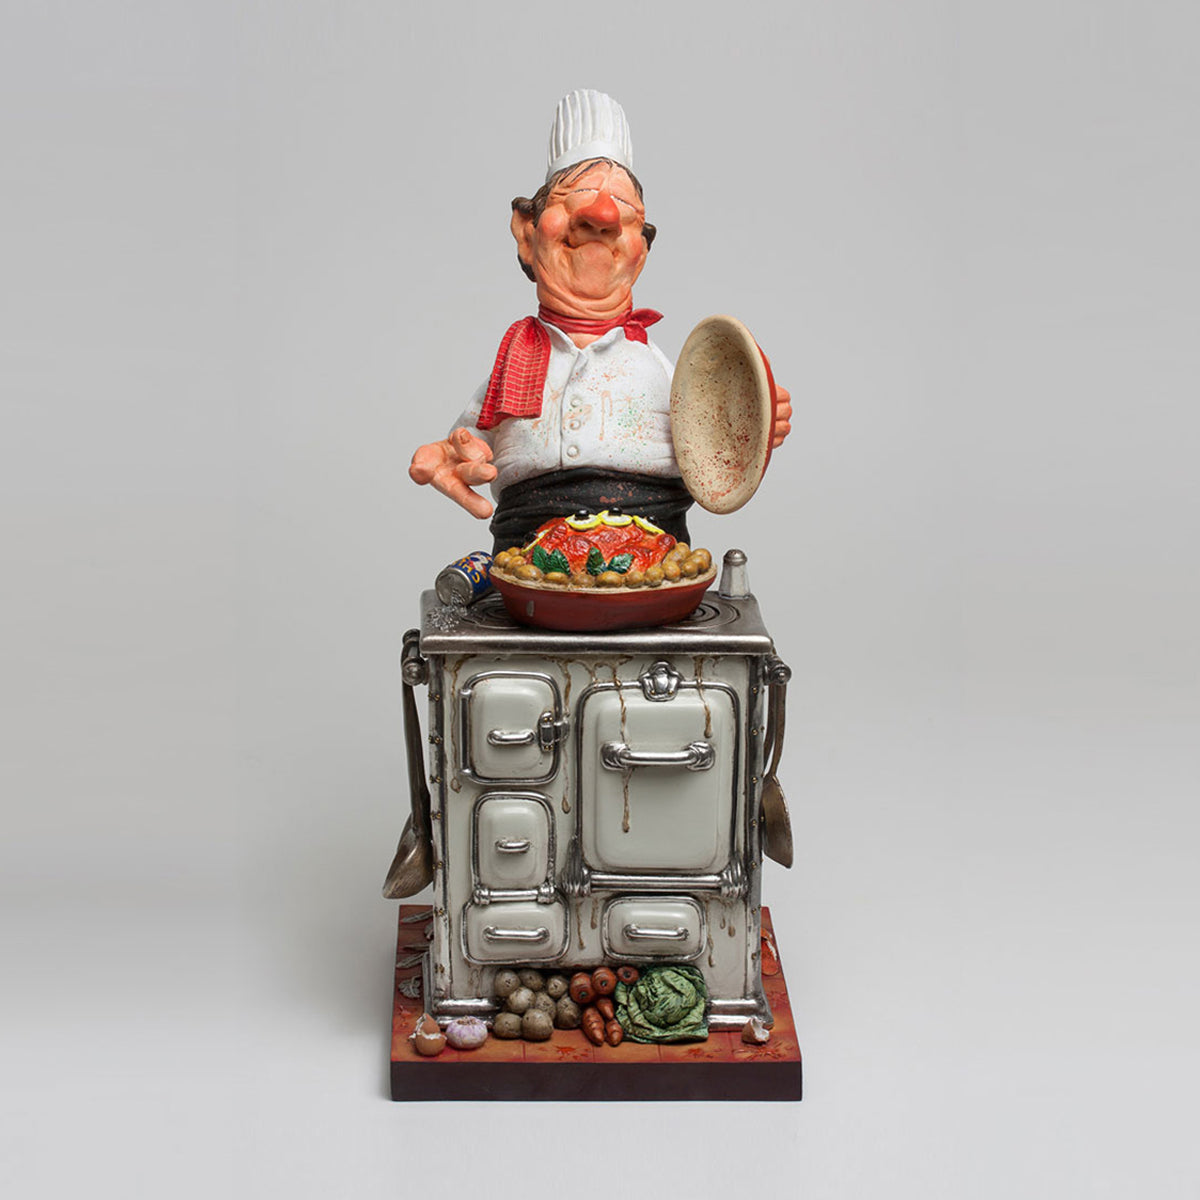 The Master Chef - Designer Studio - artefacts for Buy Home Decor